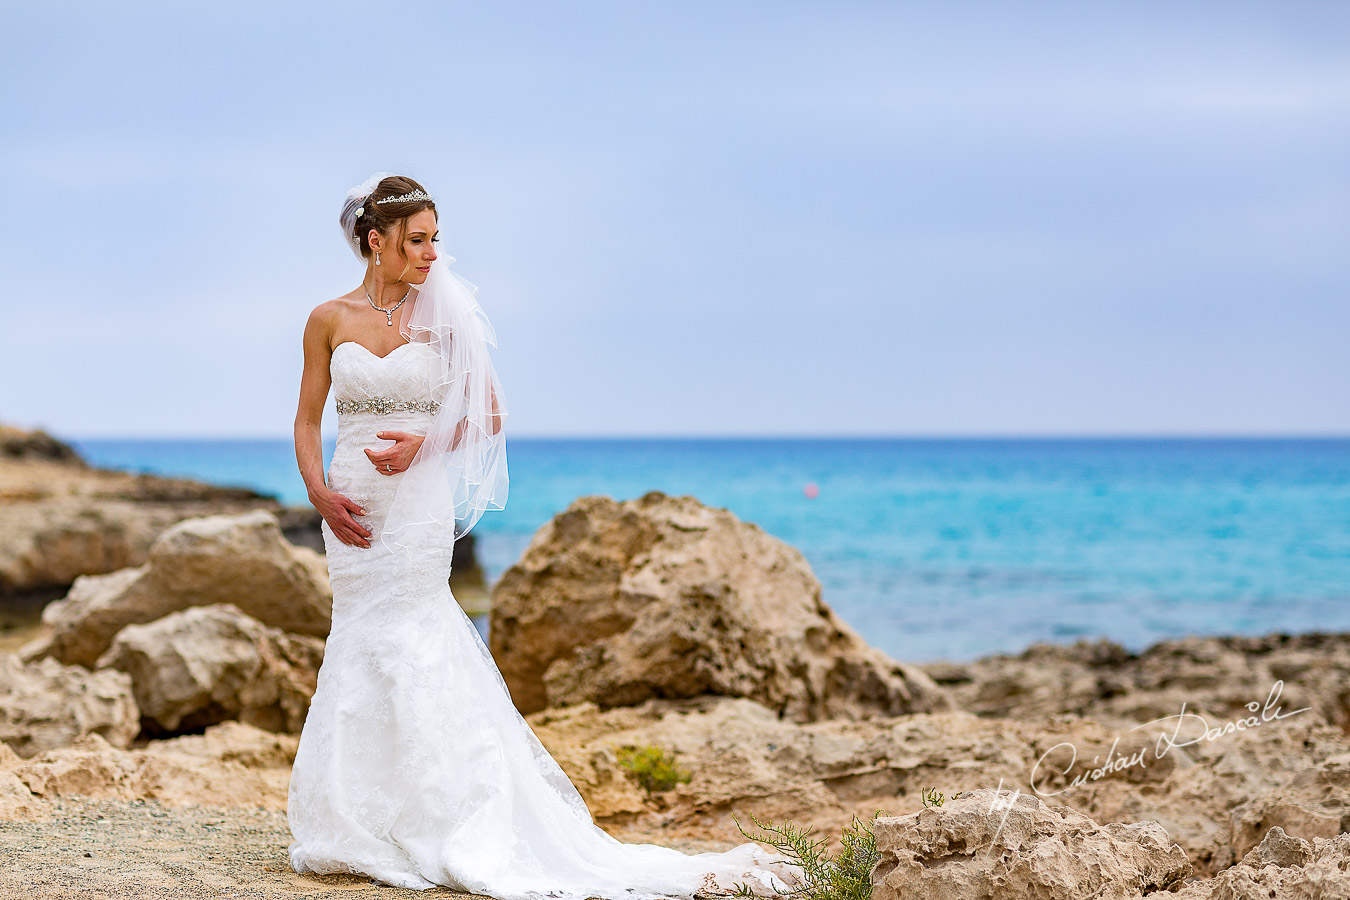 Bride Alicia photographed at Nissi Beach Resort in Ayia Napa, Cyprus by Cristian Dascalu.